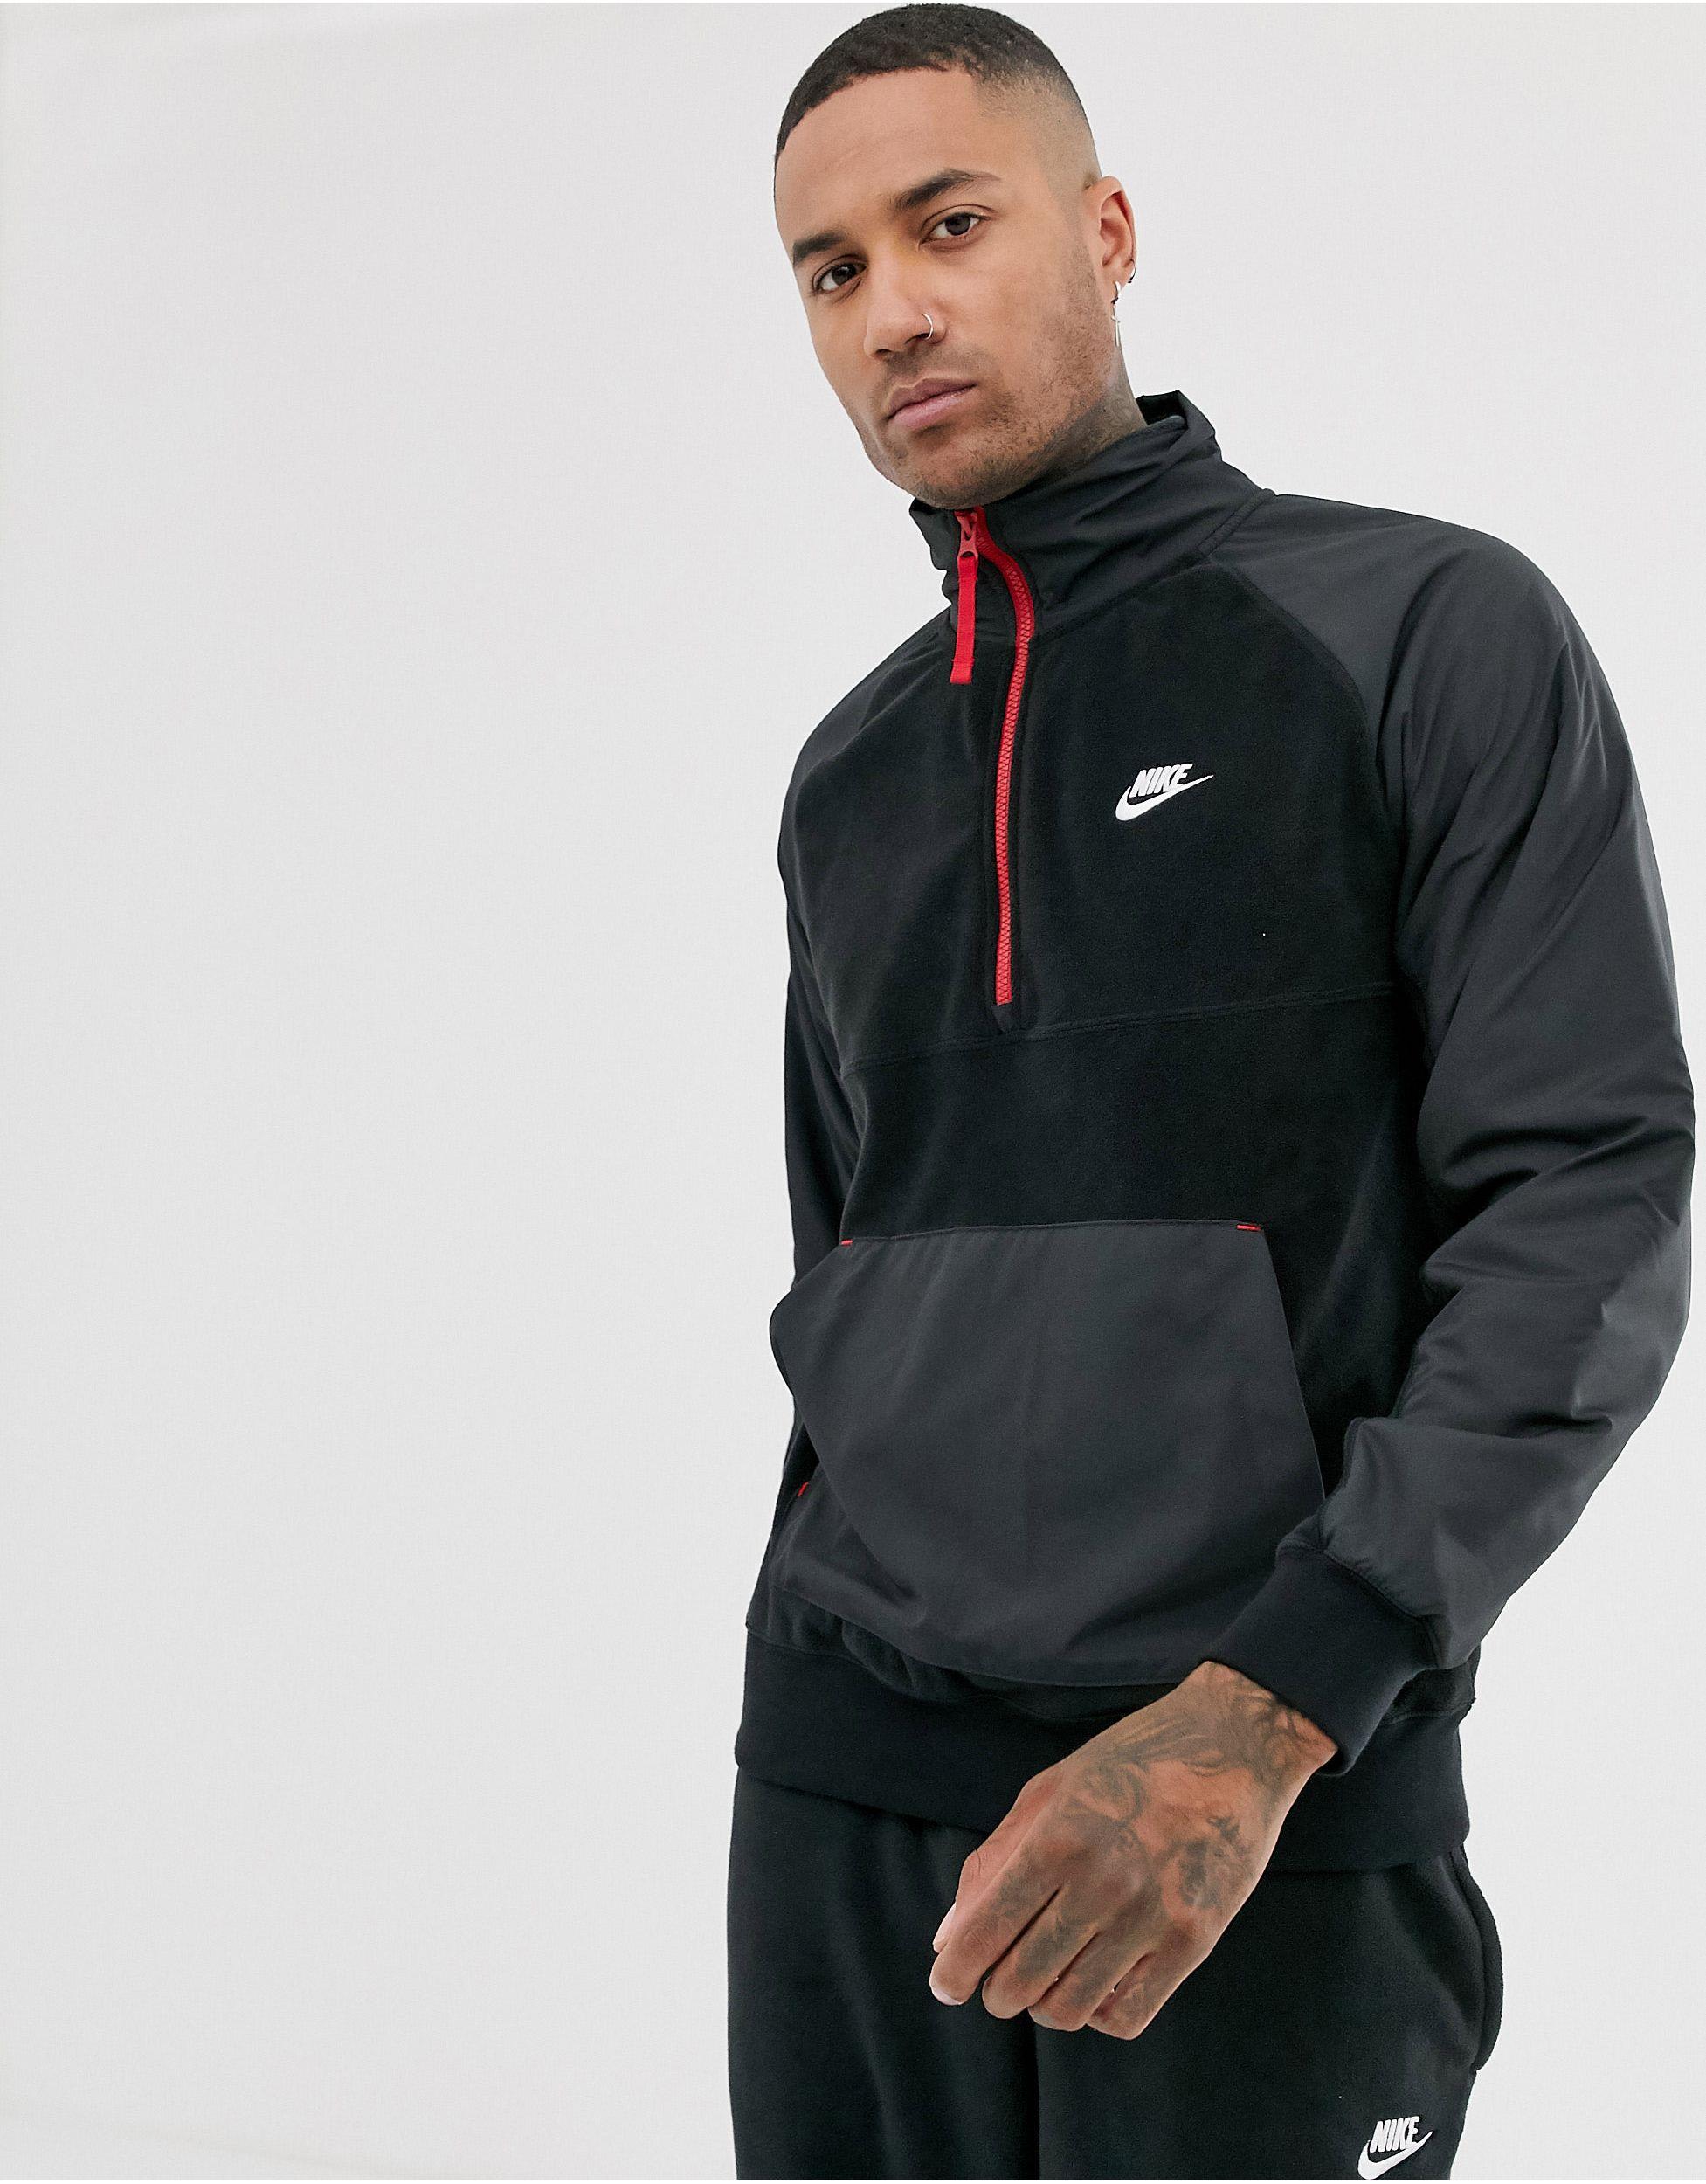 Nike Polaire Demi Zip Deals, SAVE 51% - lutheranems.com